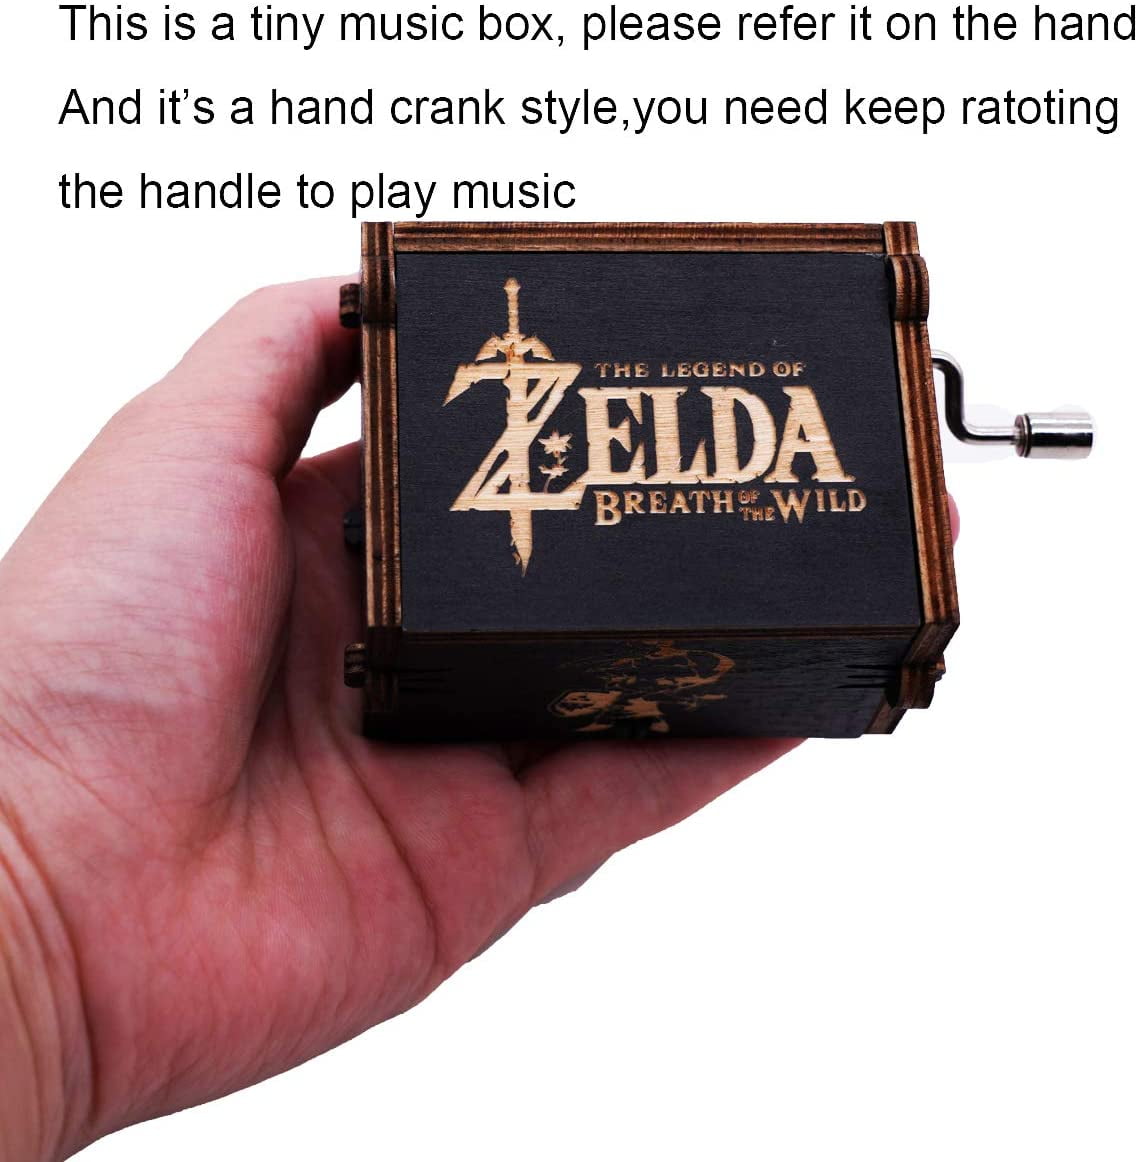 Music Box Classics: The Legend of Zelda – Album par Video Game Music Box –  Apple Music